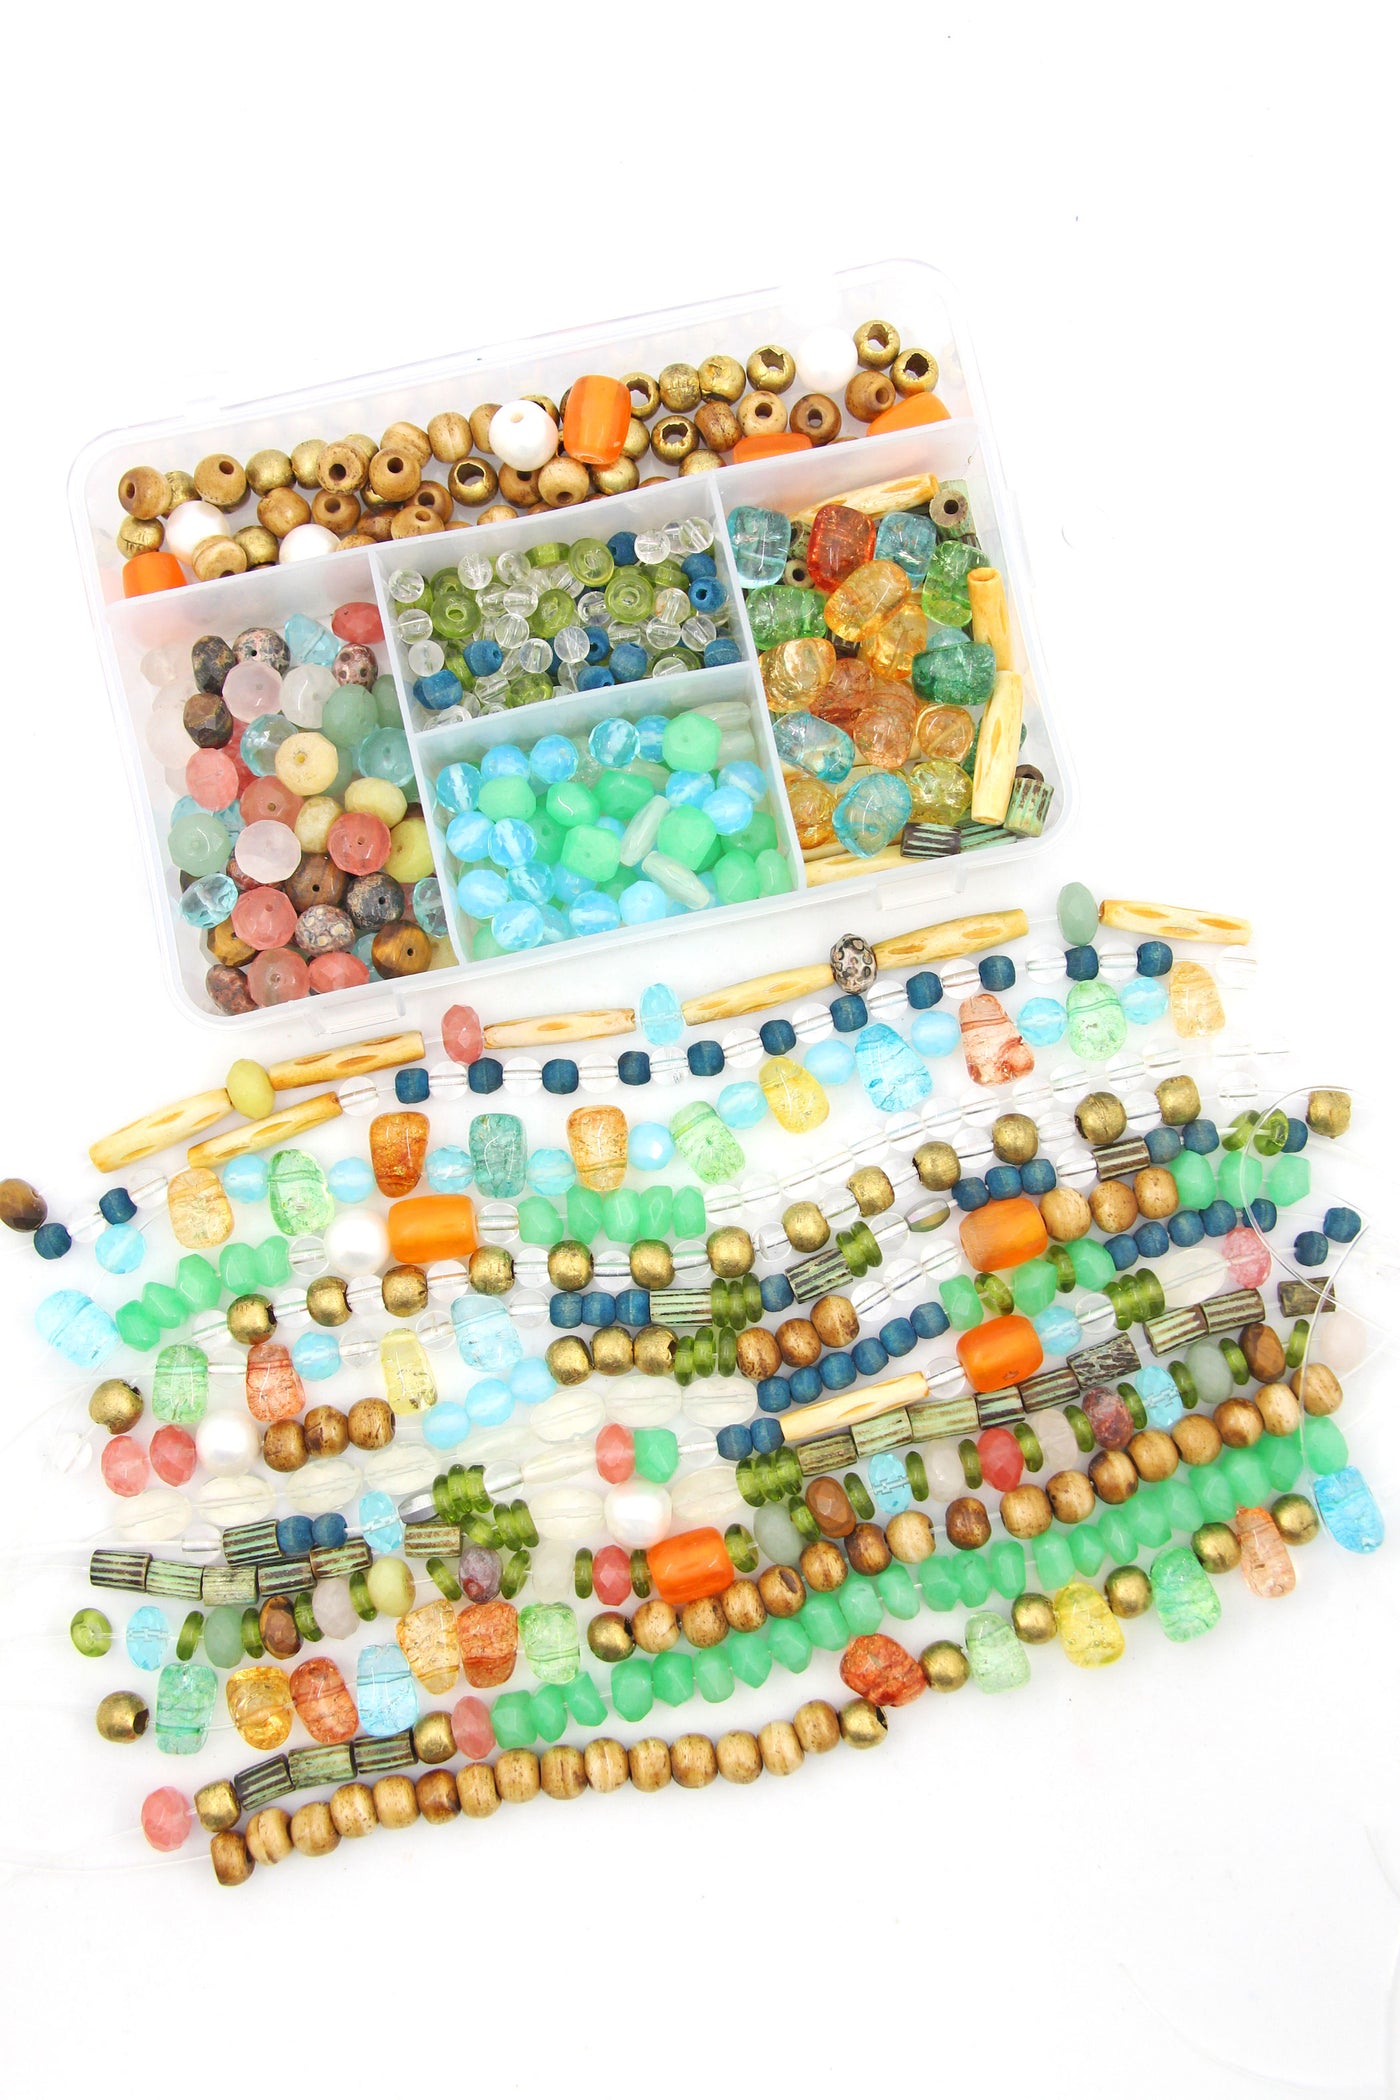 DISHIO Bracelet Making Kit Friendship Clay Beads 2 Boxes Flat - Import It  All